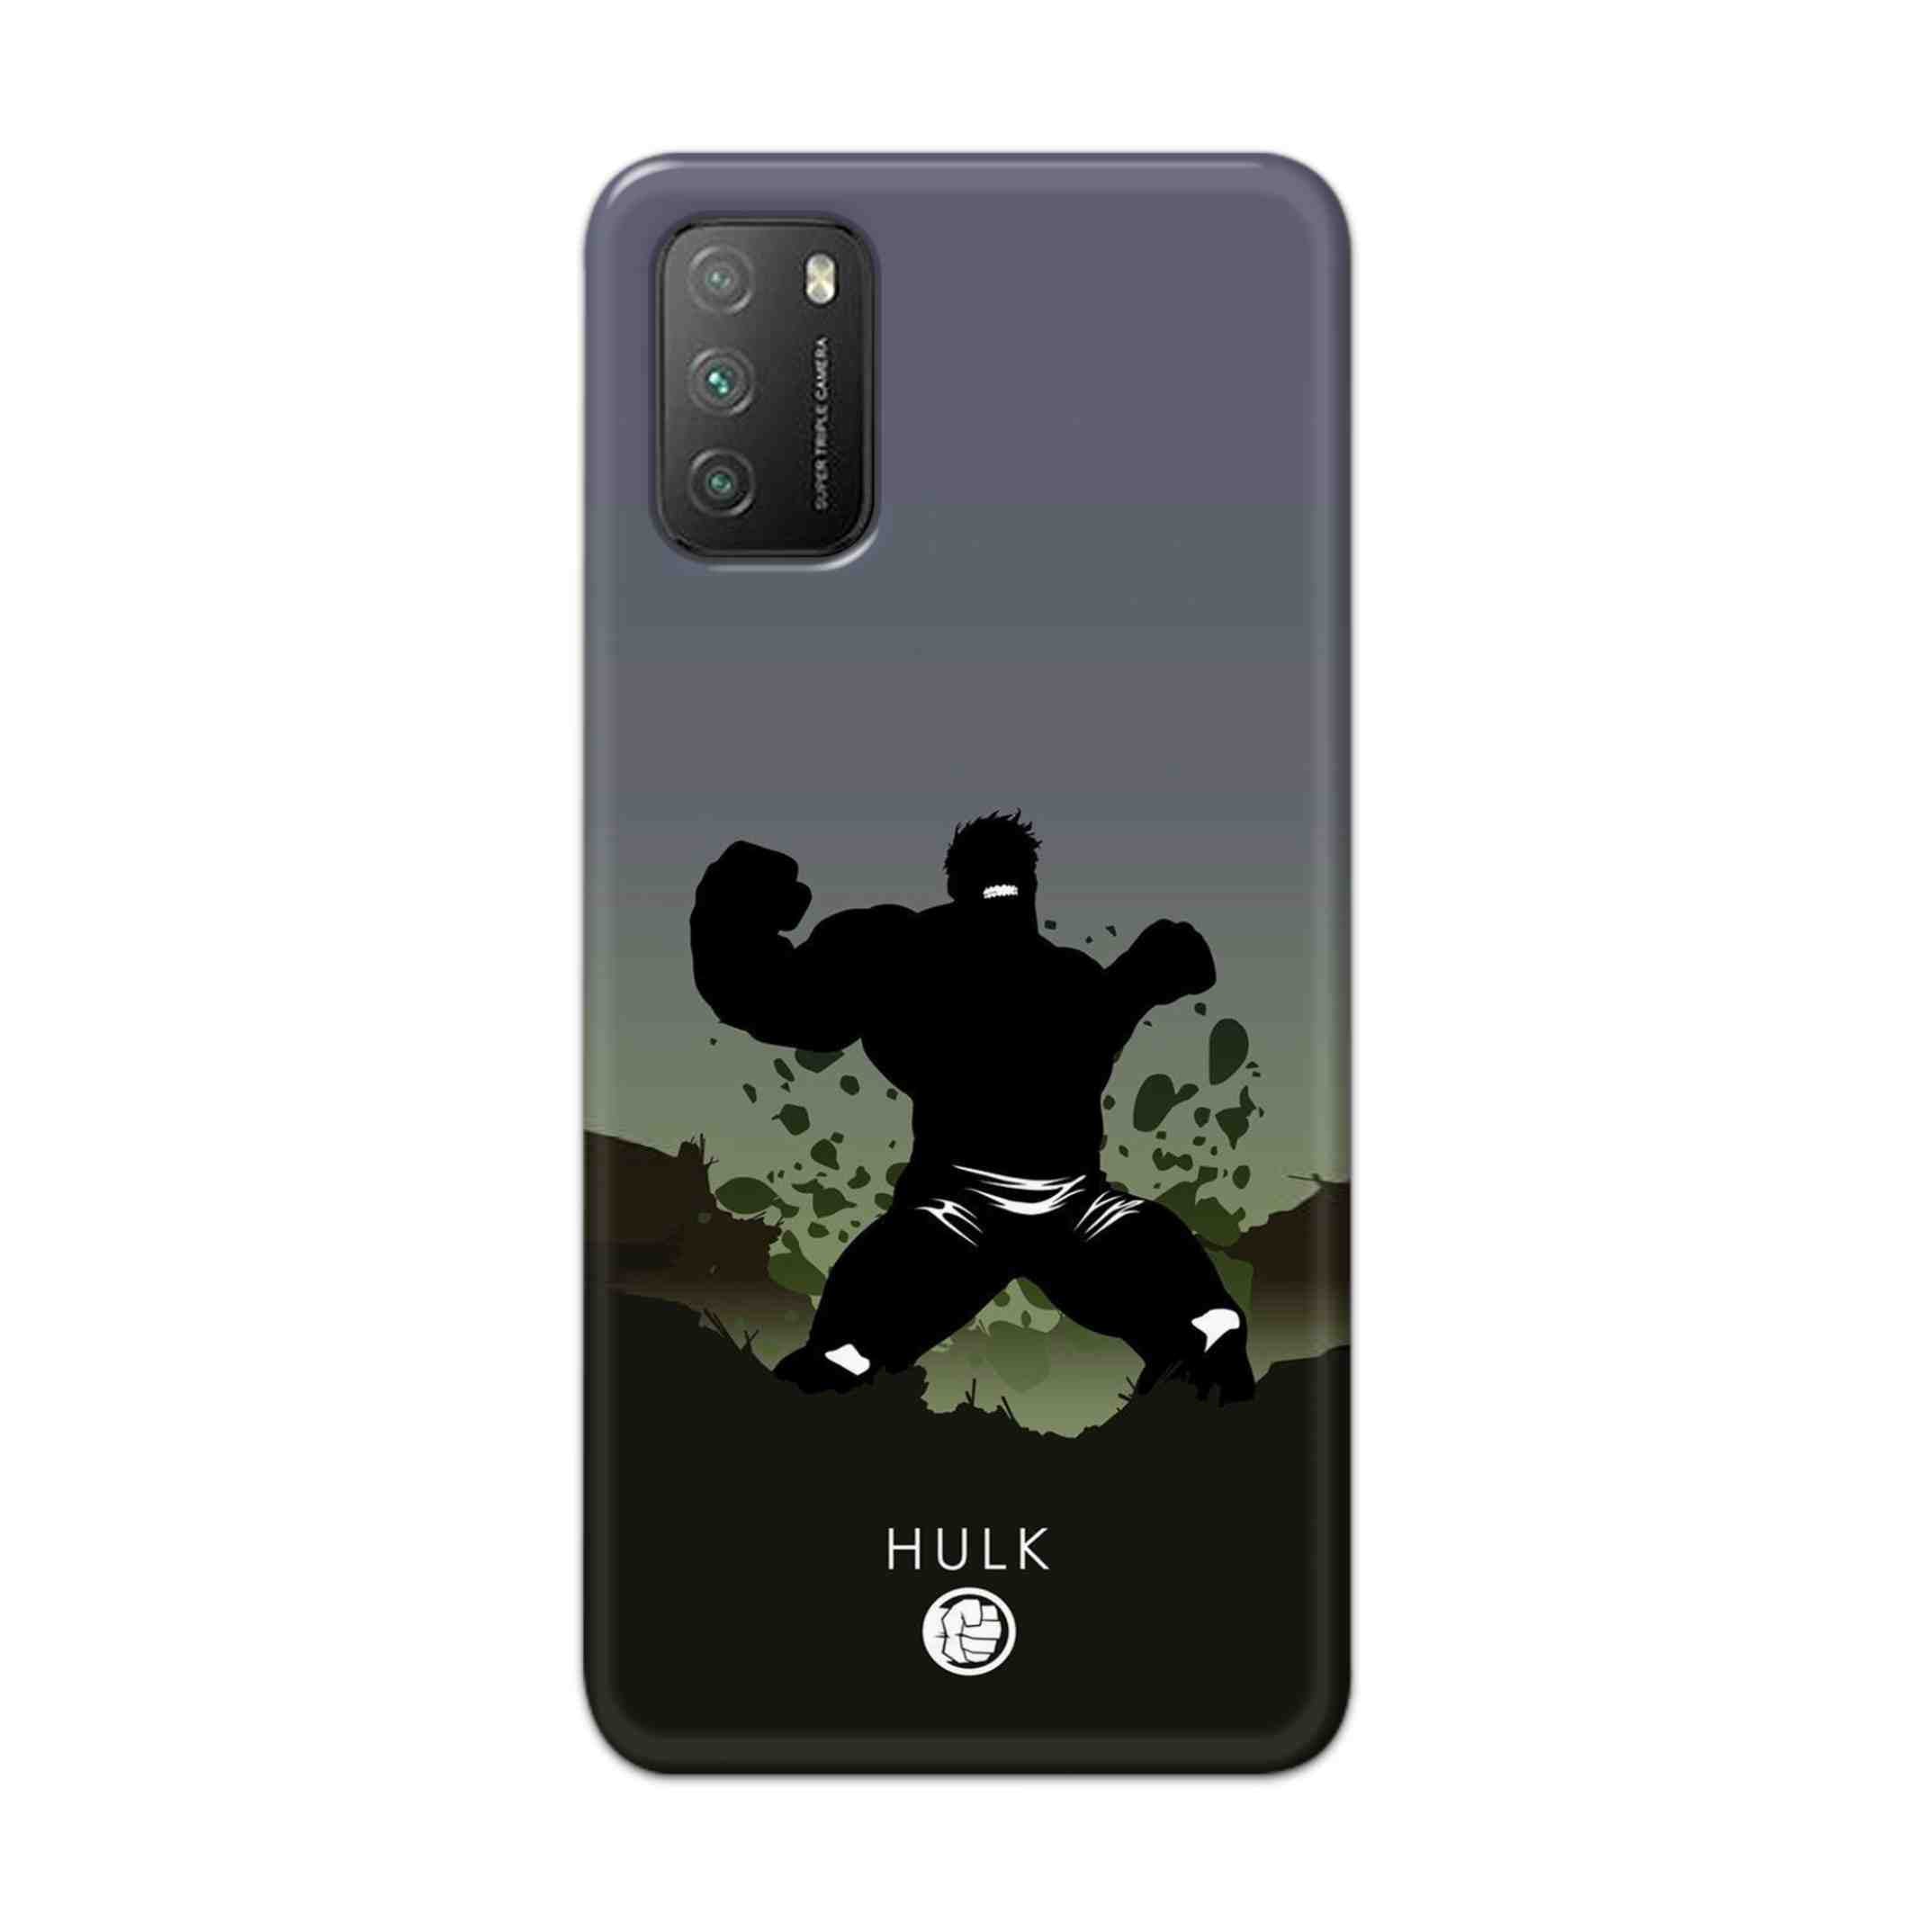 Buy Hulk Drax Hard Back Mobile Phone Case Cover For Poco M3 Online